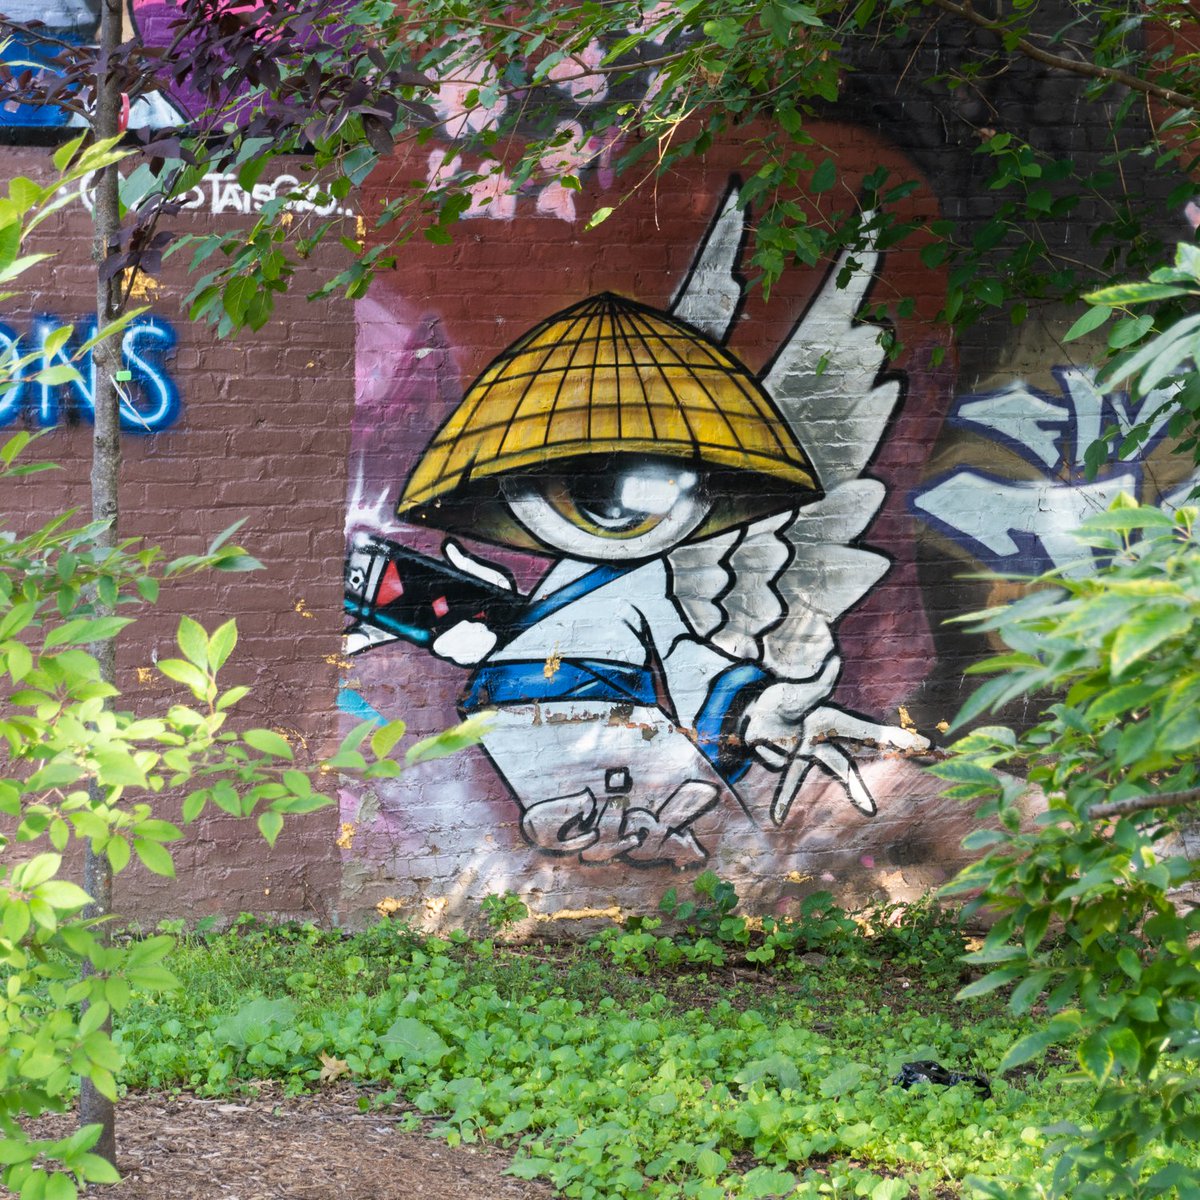 Mural in Kingsbridge.  Who's Bronx? Our Bronx?

#kingsbridge #bronx #mural #painting #graffiti #grunge #IG_Street #StreetGrammer #StreetShooter #StreetShot #StreetLife #StoryOfTheStreet #LensCultureStreets
#StreetView #Street_Photography #Citygrammers #urban #instapic